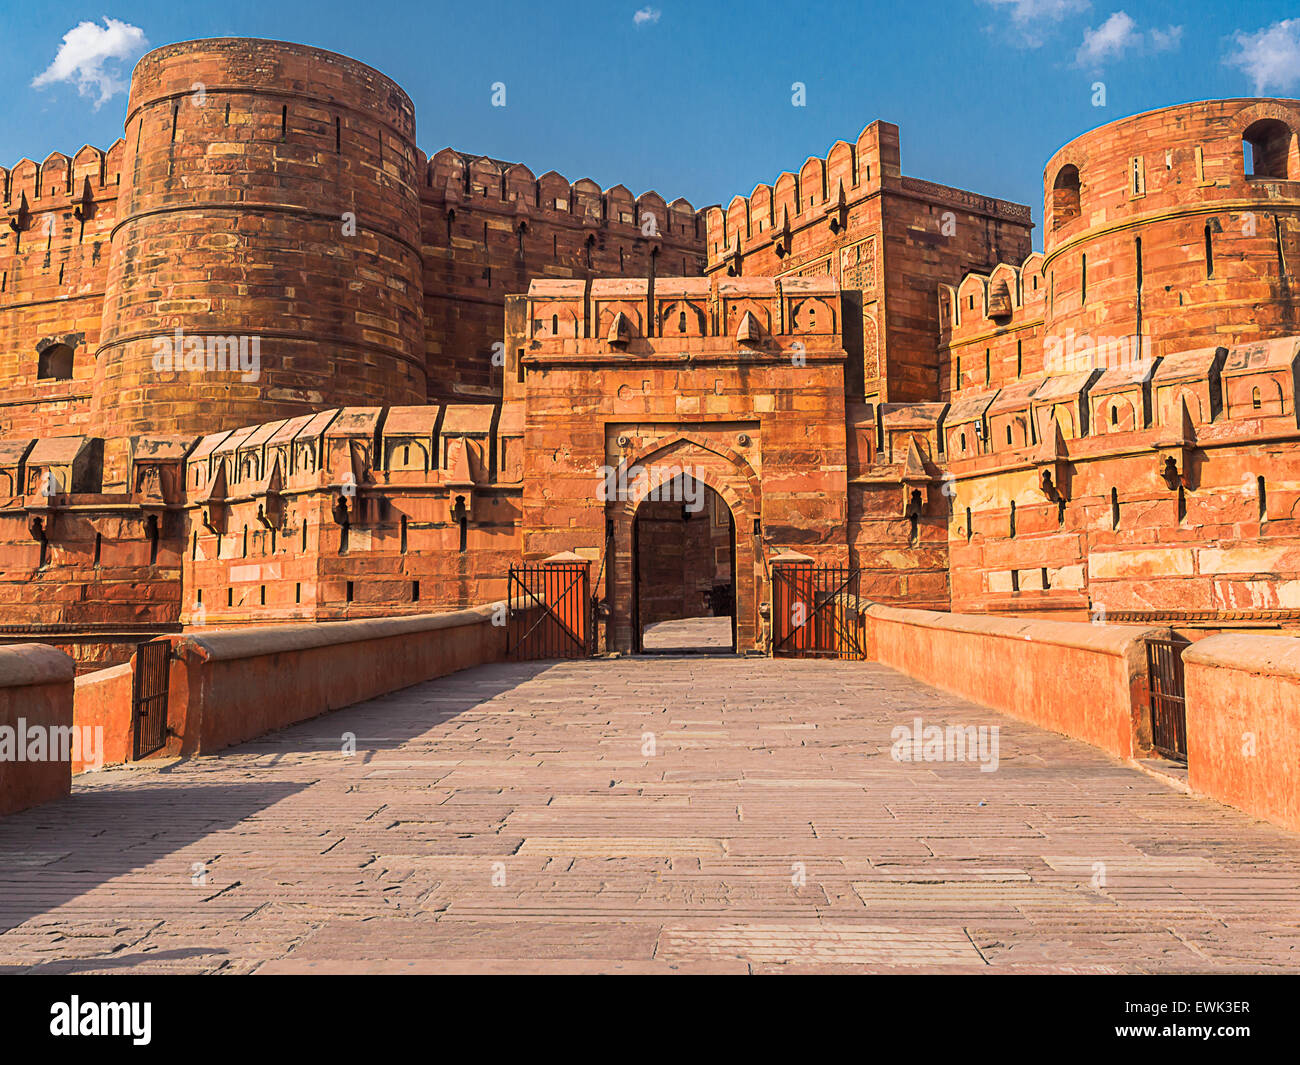 Agra Fort, The Unesco world Heritage site, located in Agra, Uttar Pradesh, India Stock Photo